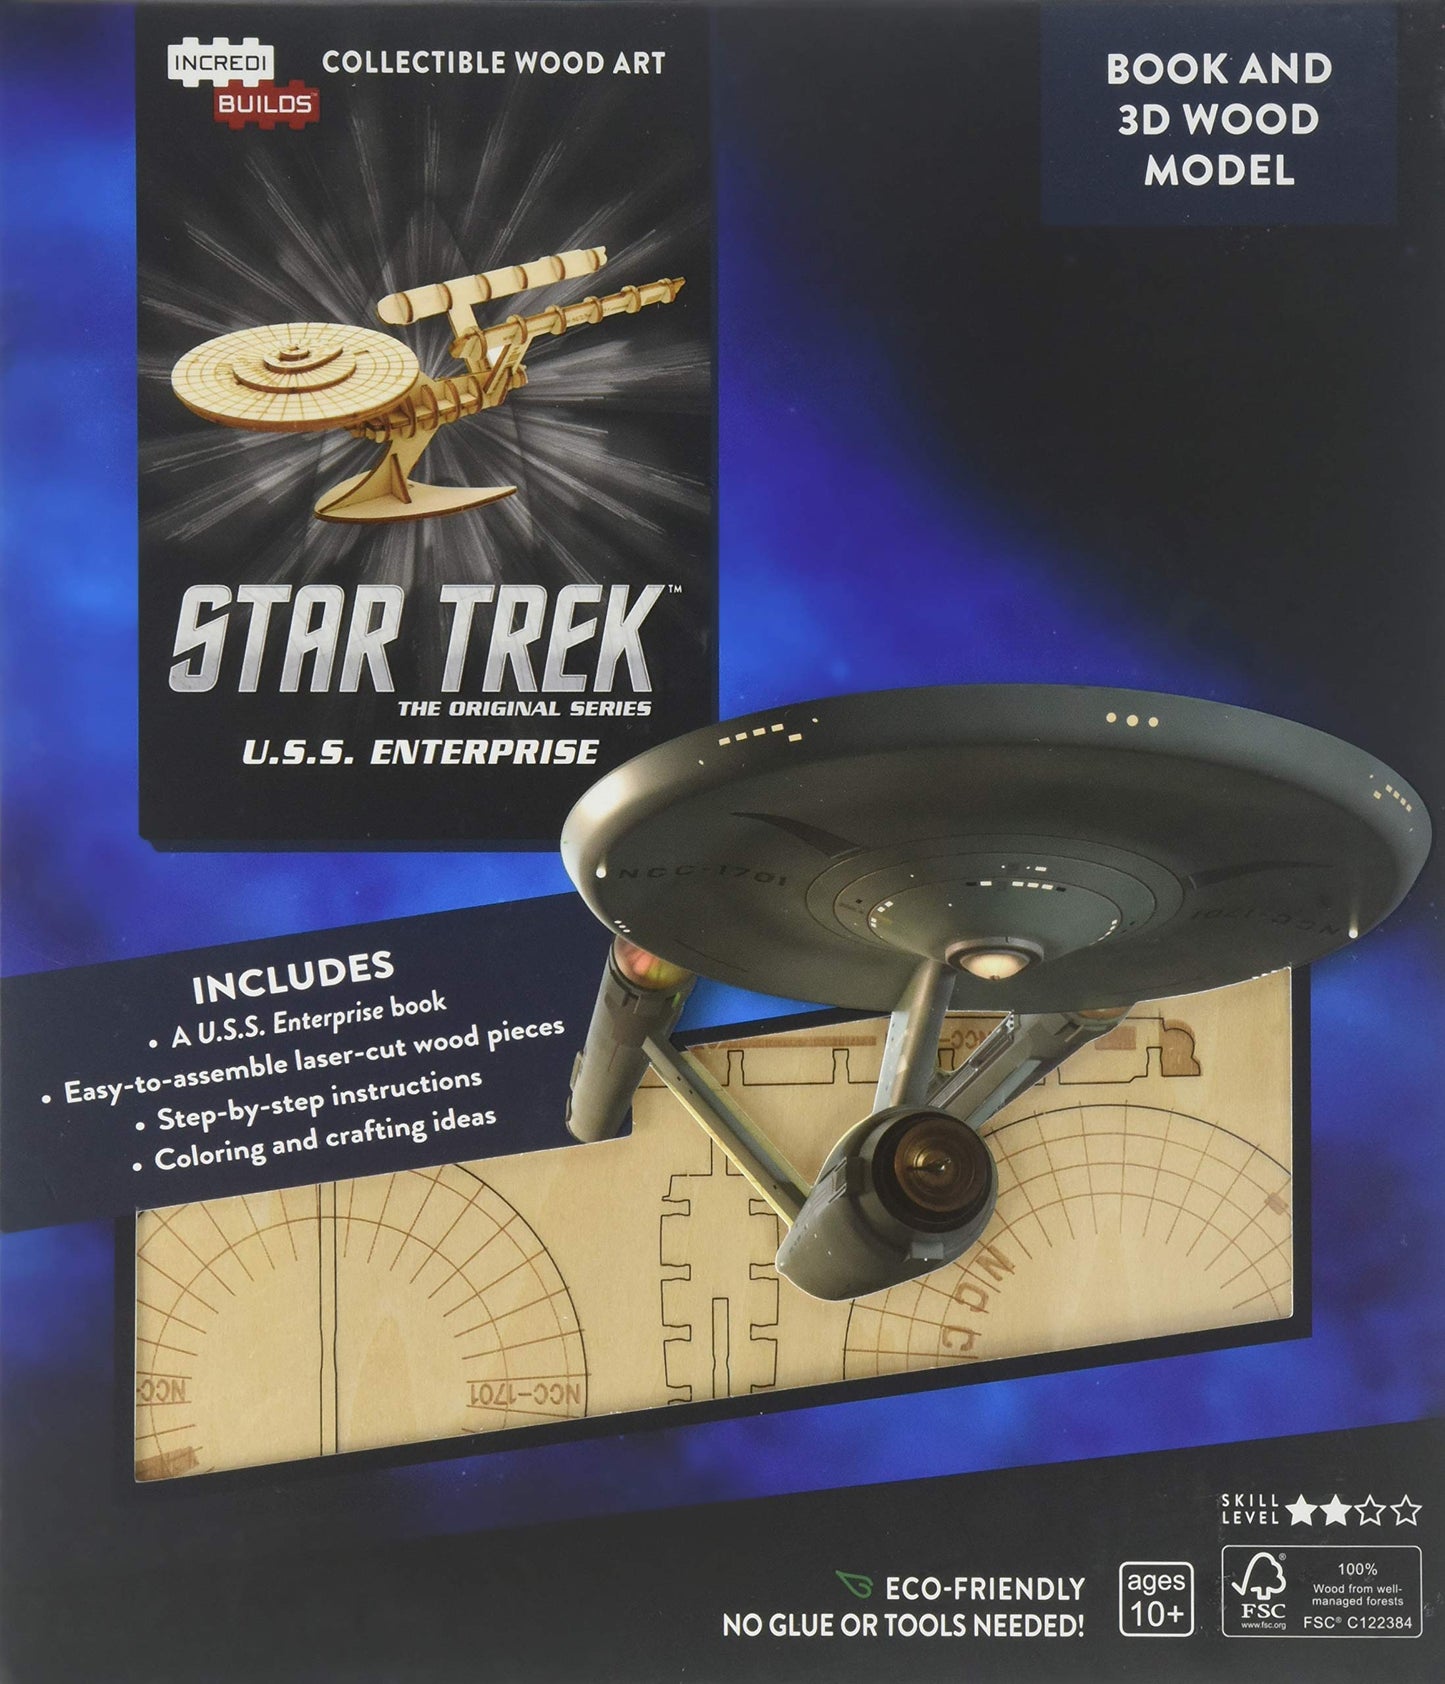 U.S.S. Enterprise IncrediBuilds 3D Wood Model Star Trek